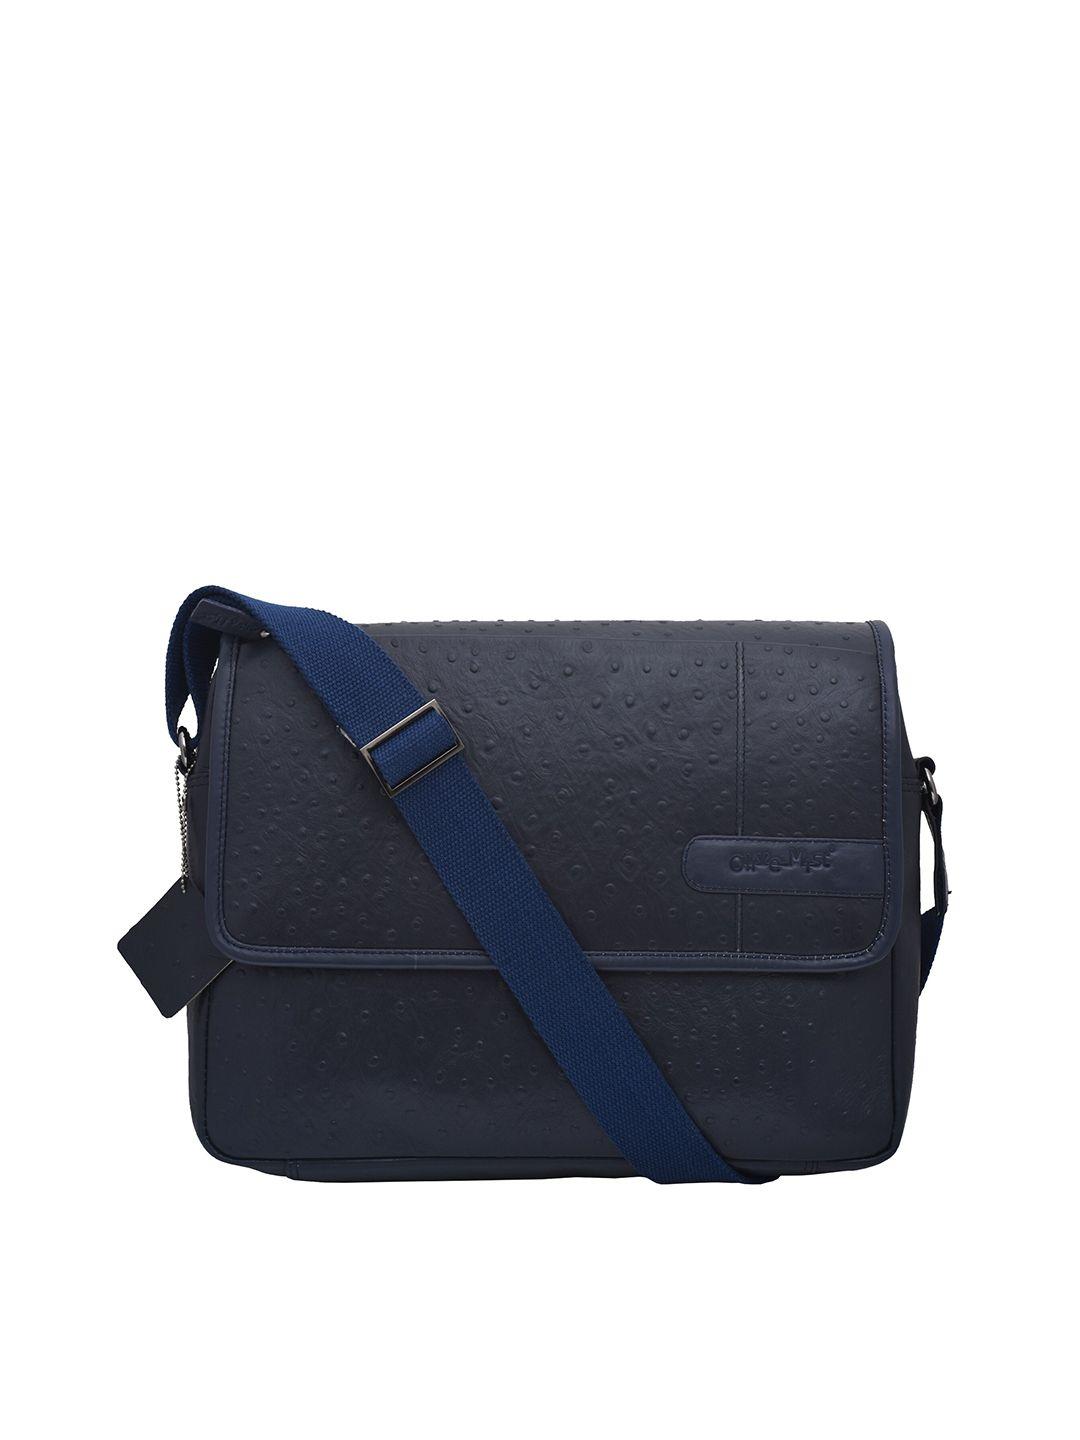 olive mist unisex navy blue textured leather laptop bag